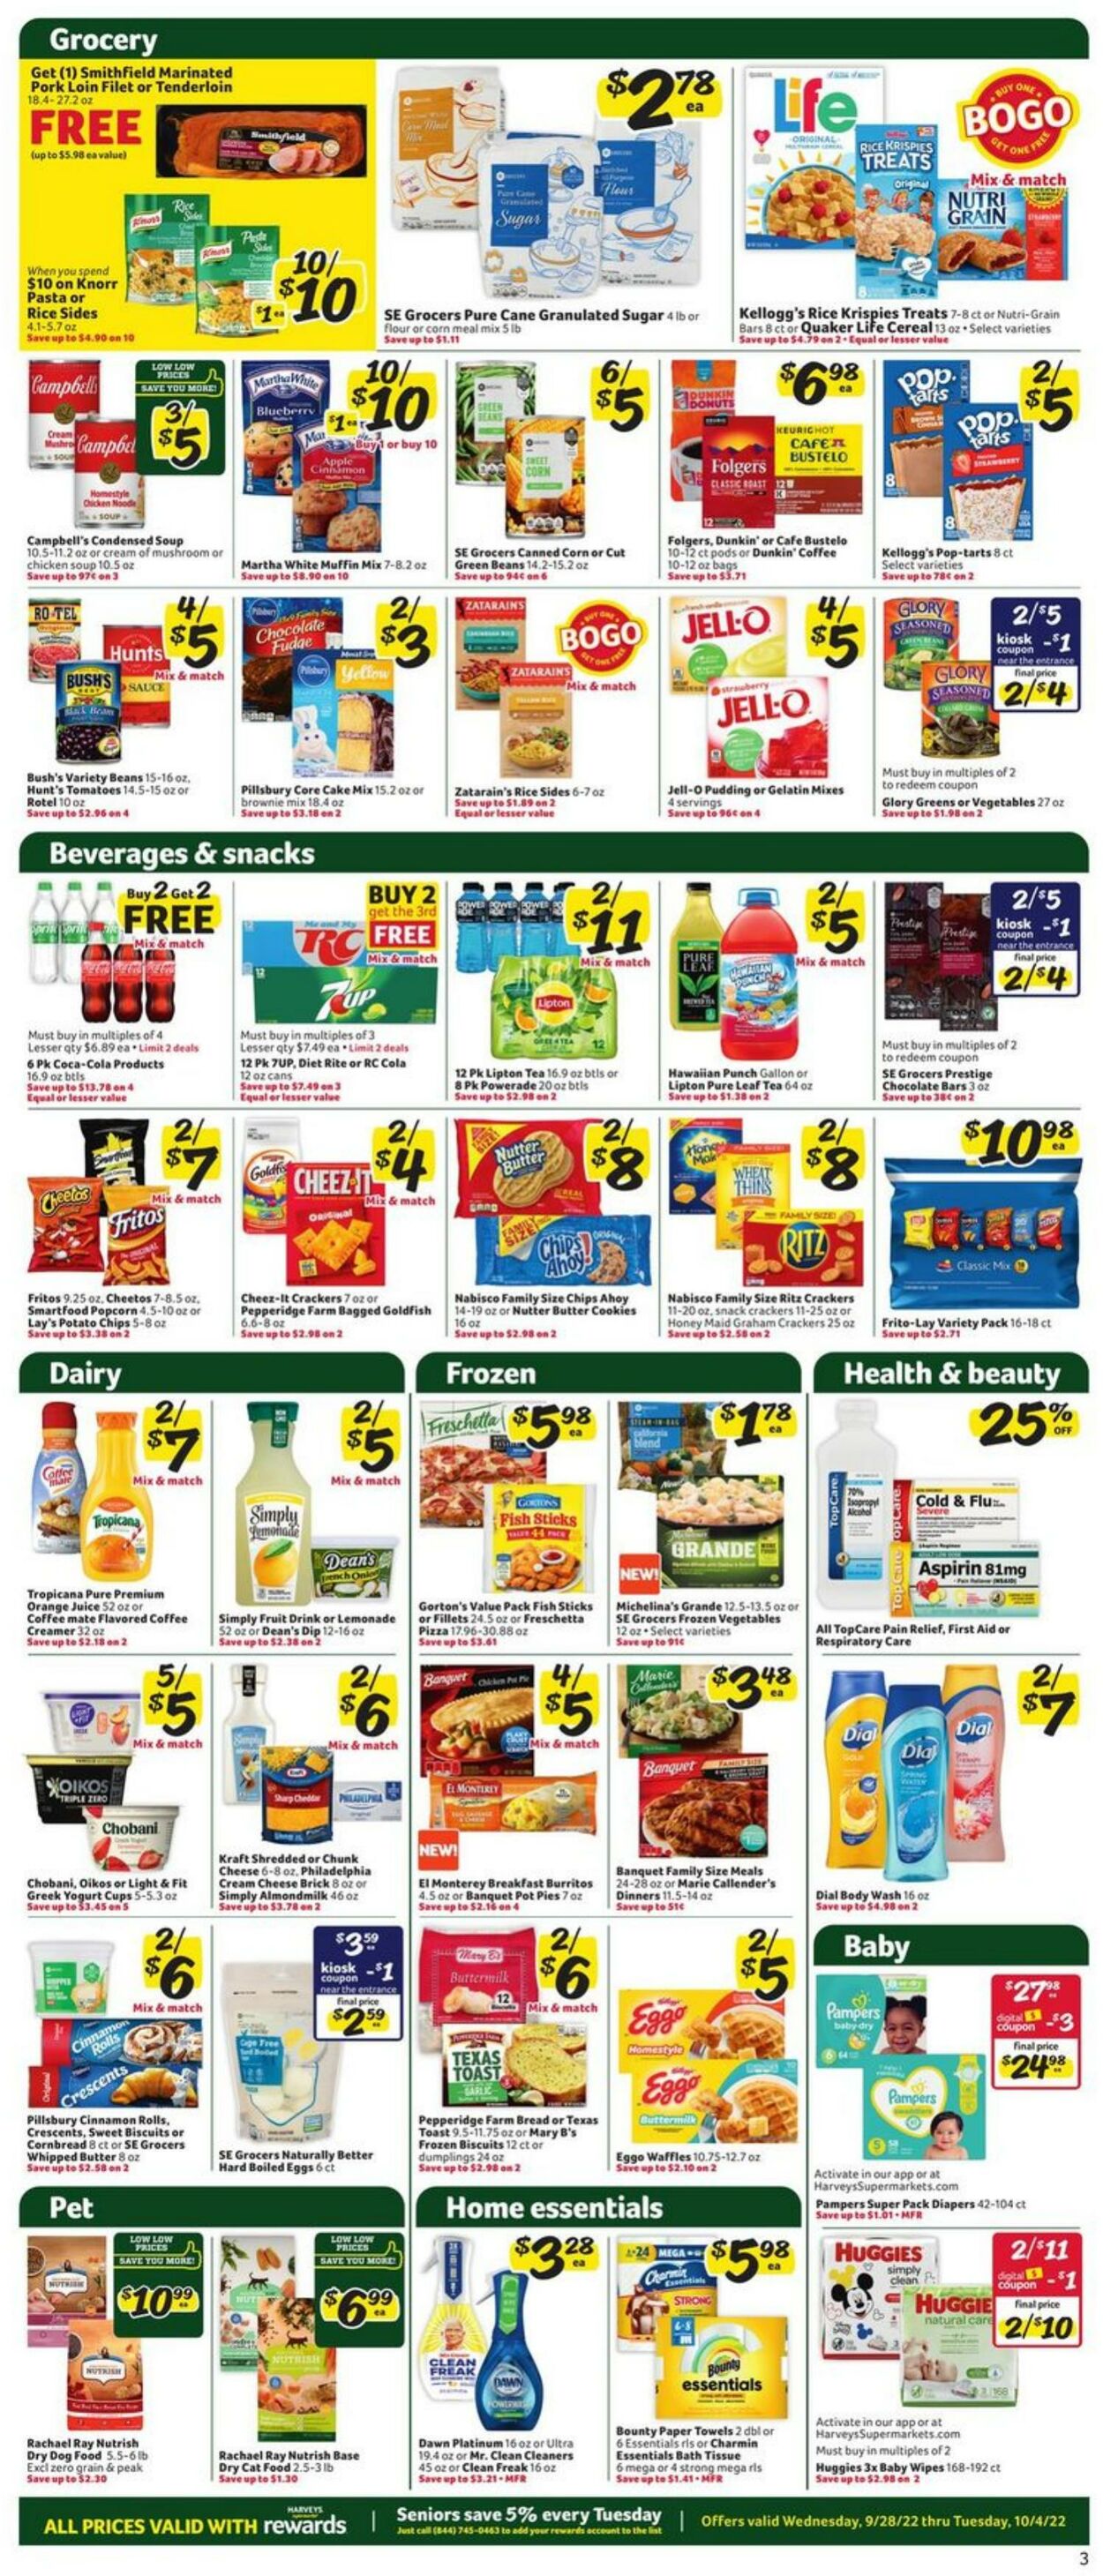 Weekly ad Harvey's Supermarkets 09/28/2022 - 10/04/2022